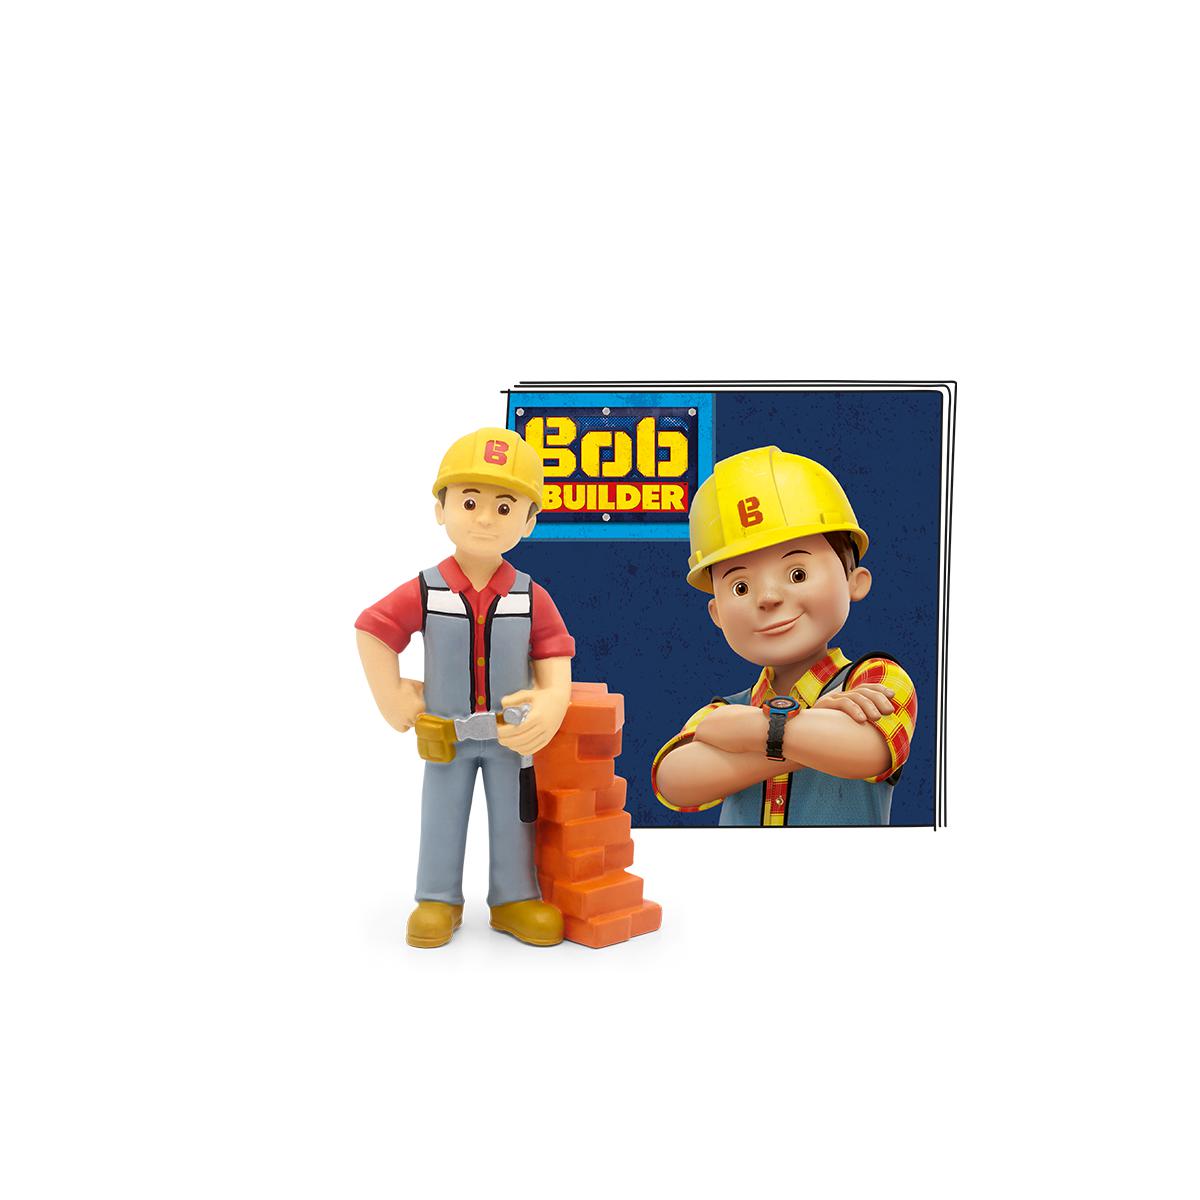 Bob the Builder Tonie Figure